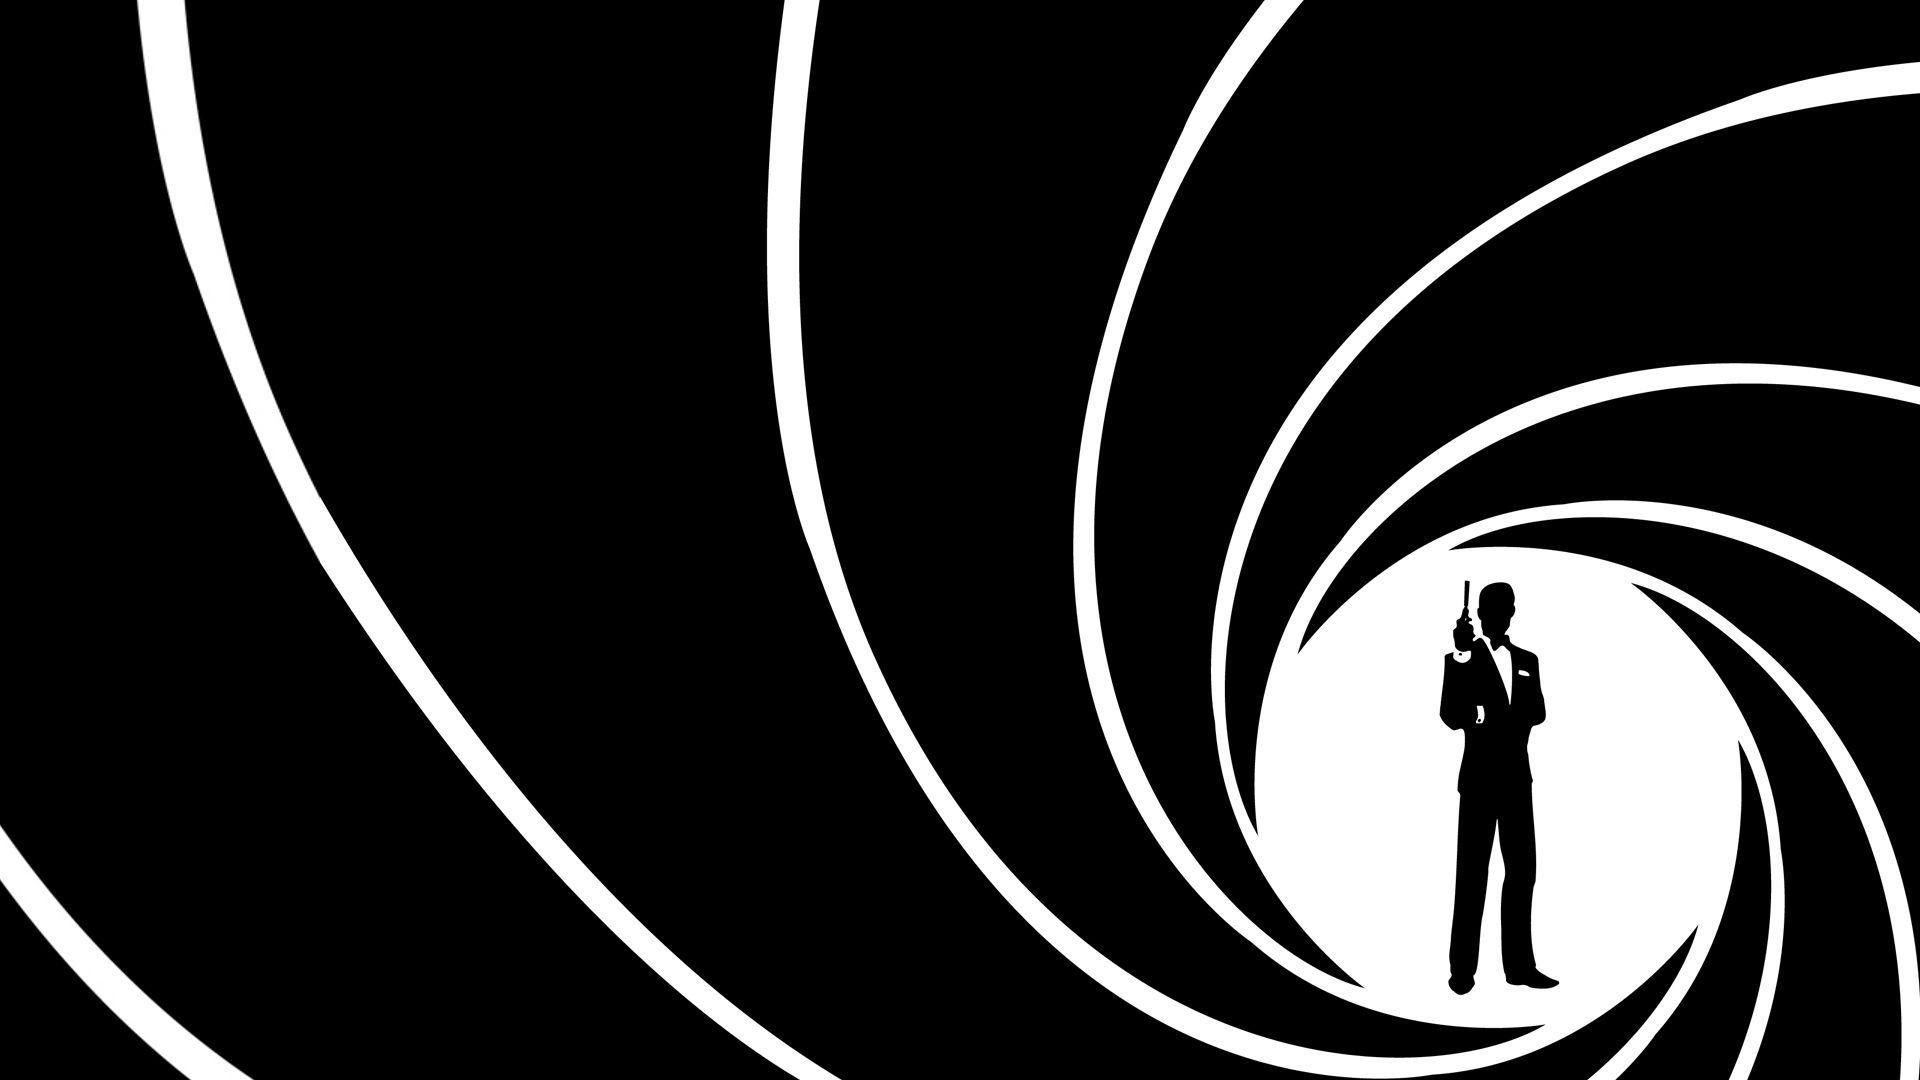 James Bond 007 Wallpapers For Desktop Wallpaper Cave